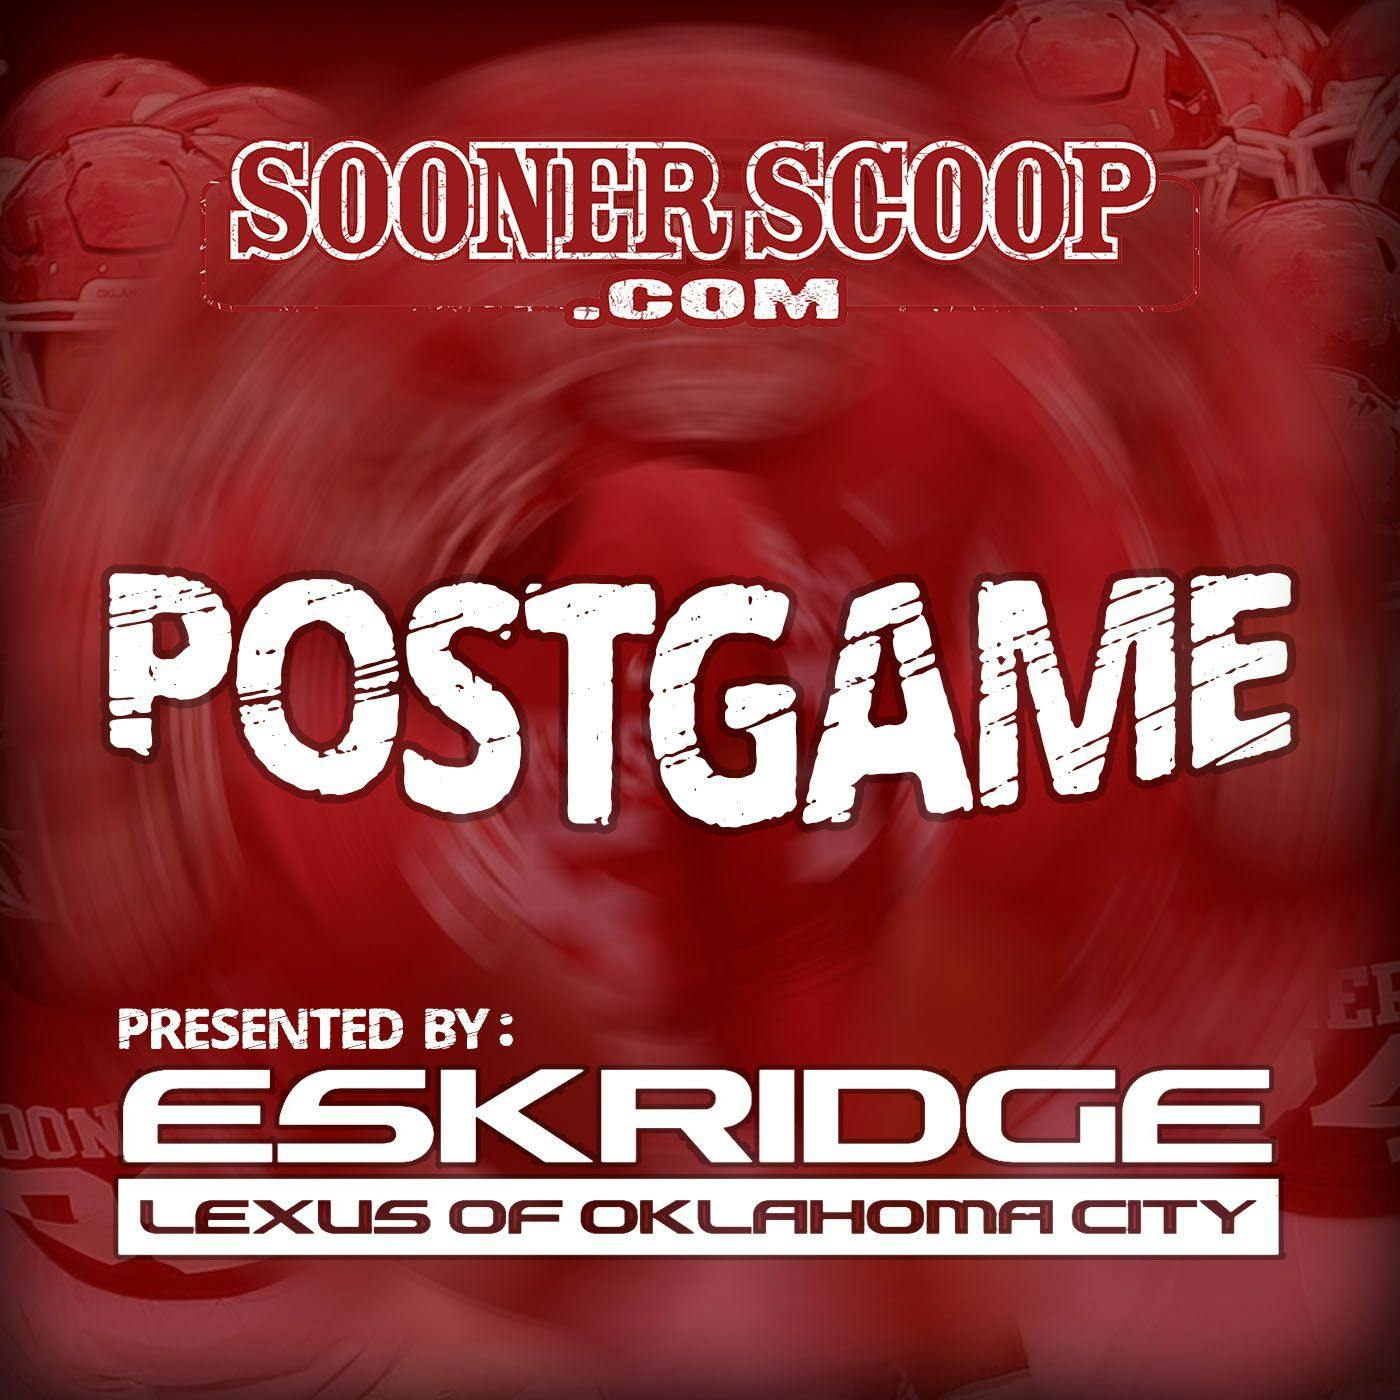 Get ready for the SoonerScoop.com Postgame from Eskridge Lexus